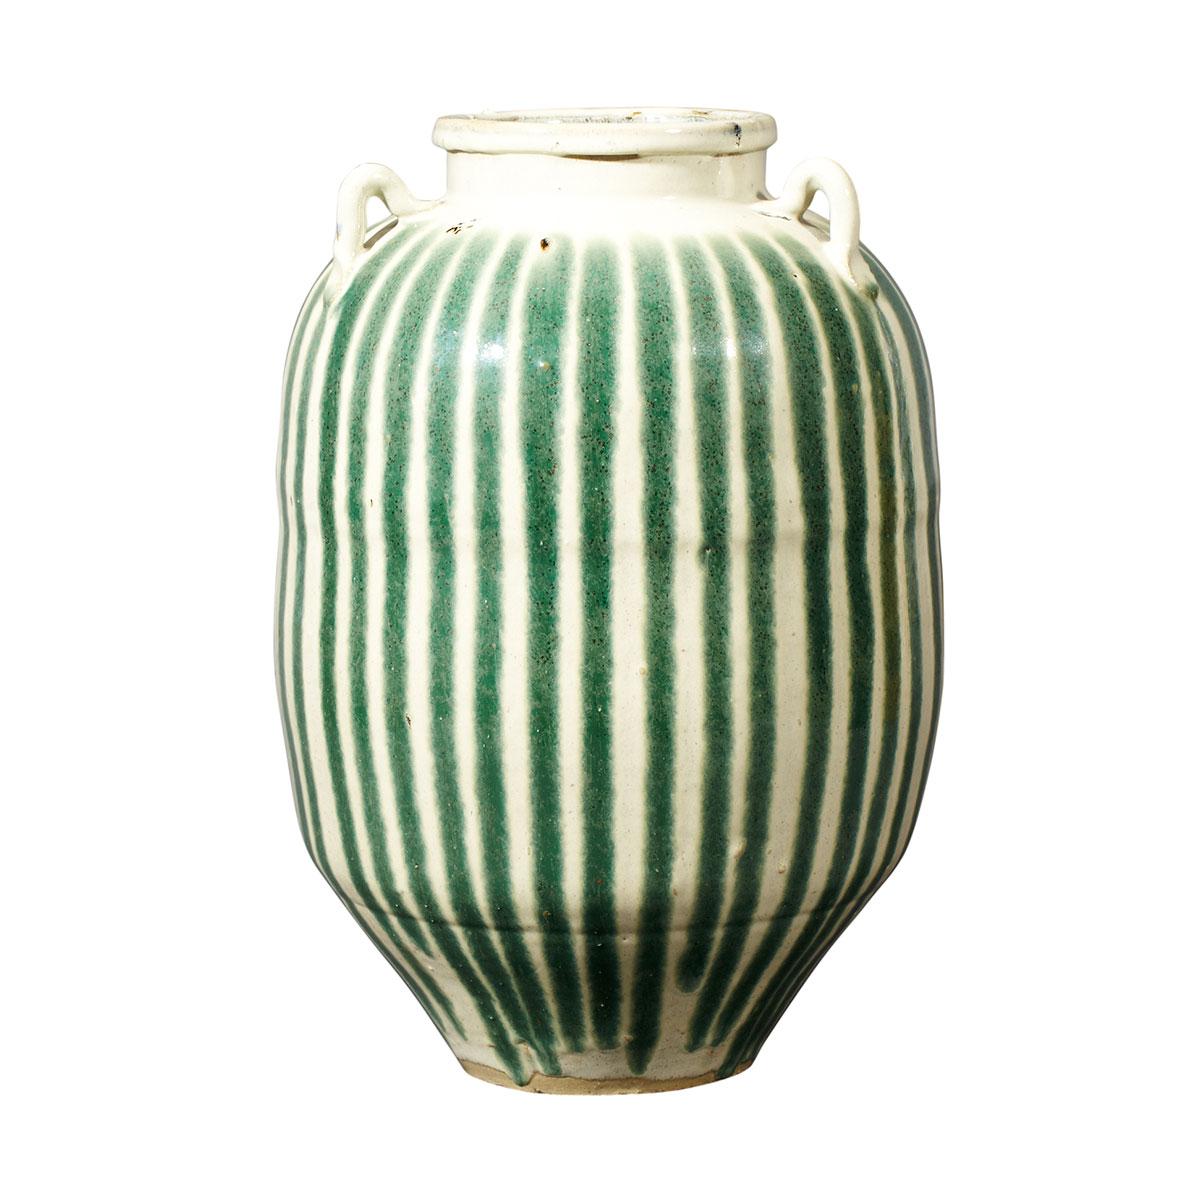 Large White and Green Glazed Jar, 19th Century